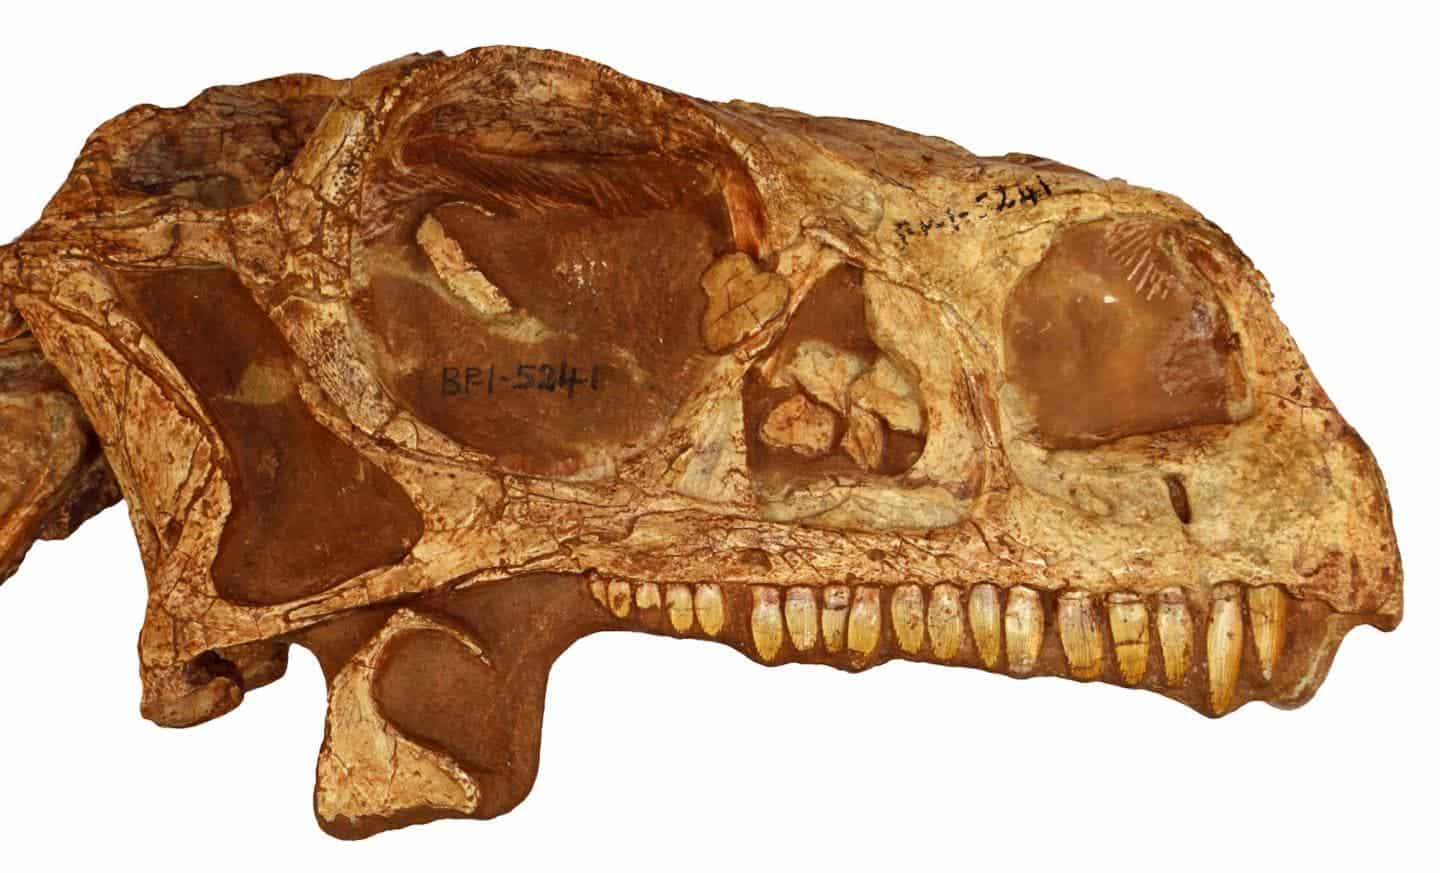 The profile view of the Massospondylus skull. Image credits: Kimberley Chapelle.